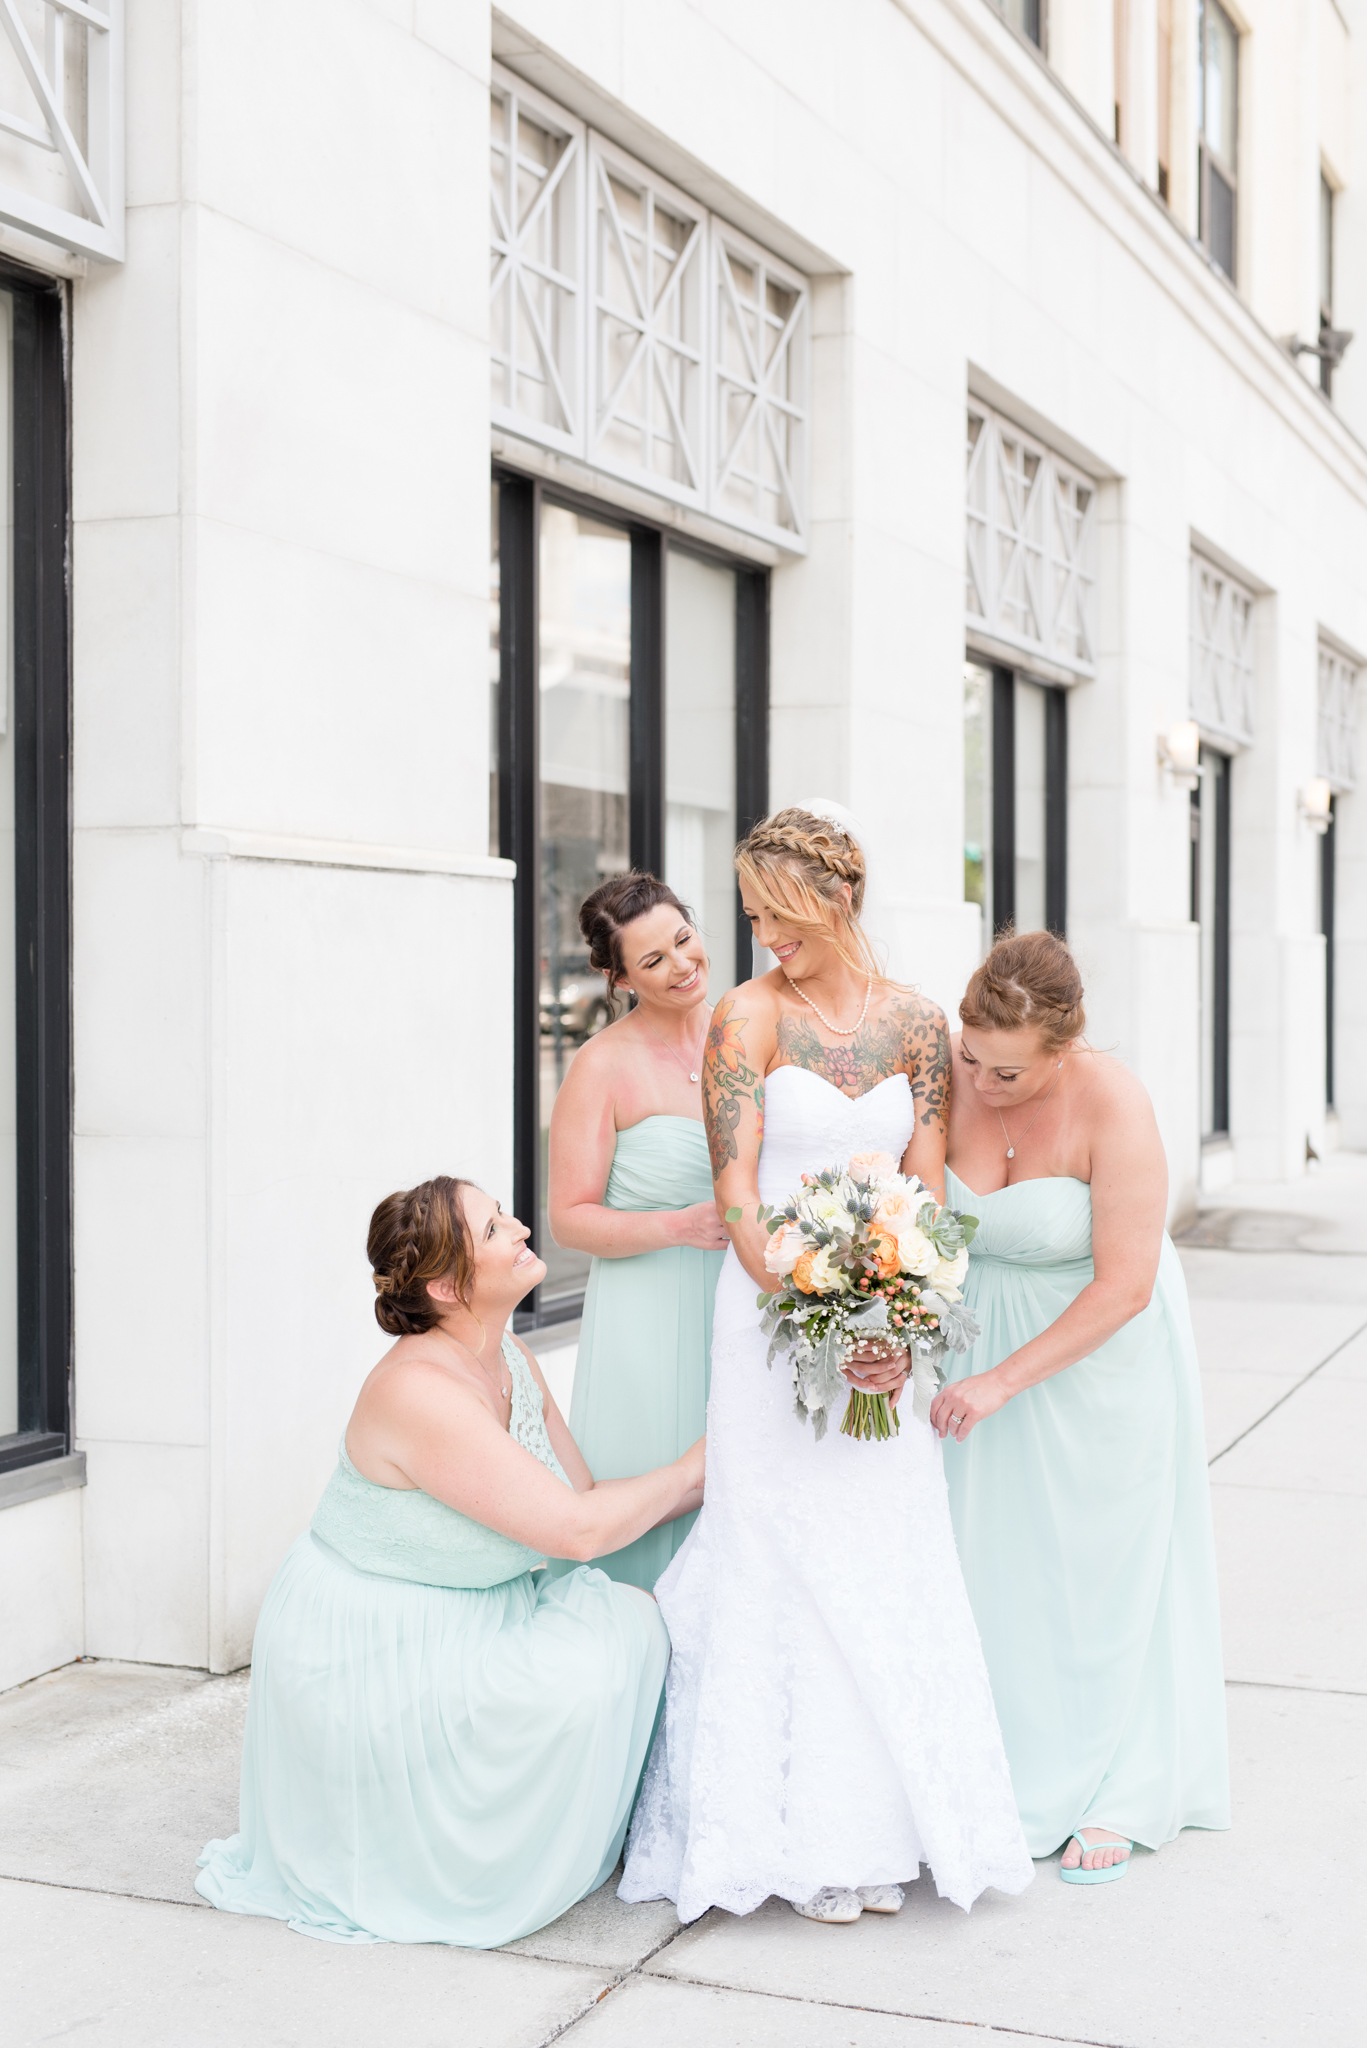 Bridal party helps bride straighten dress.